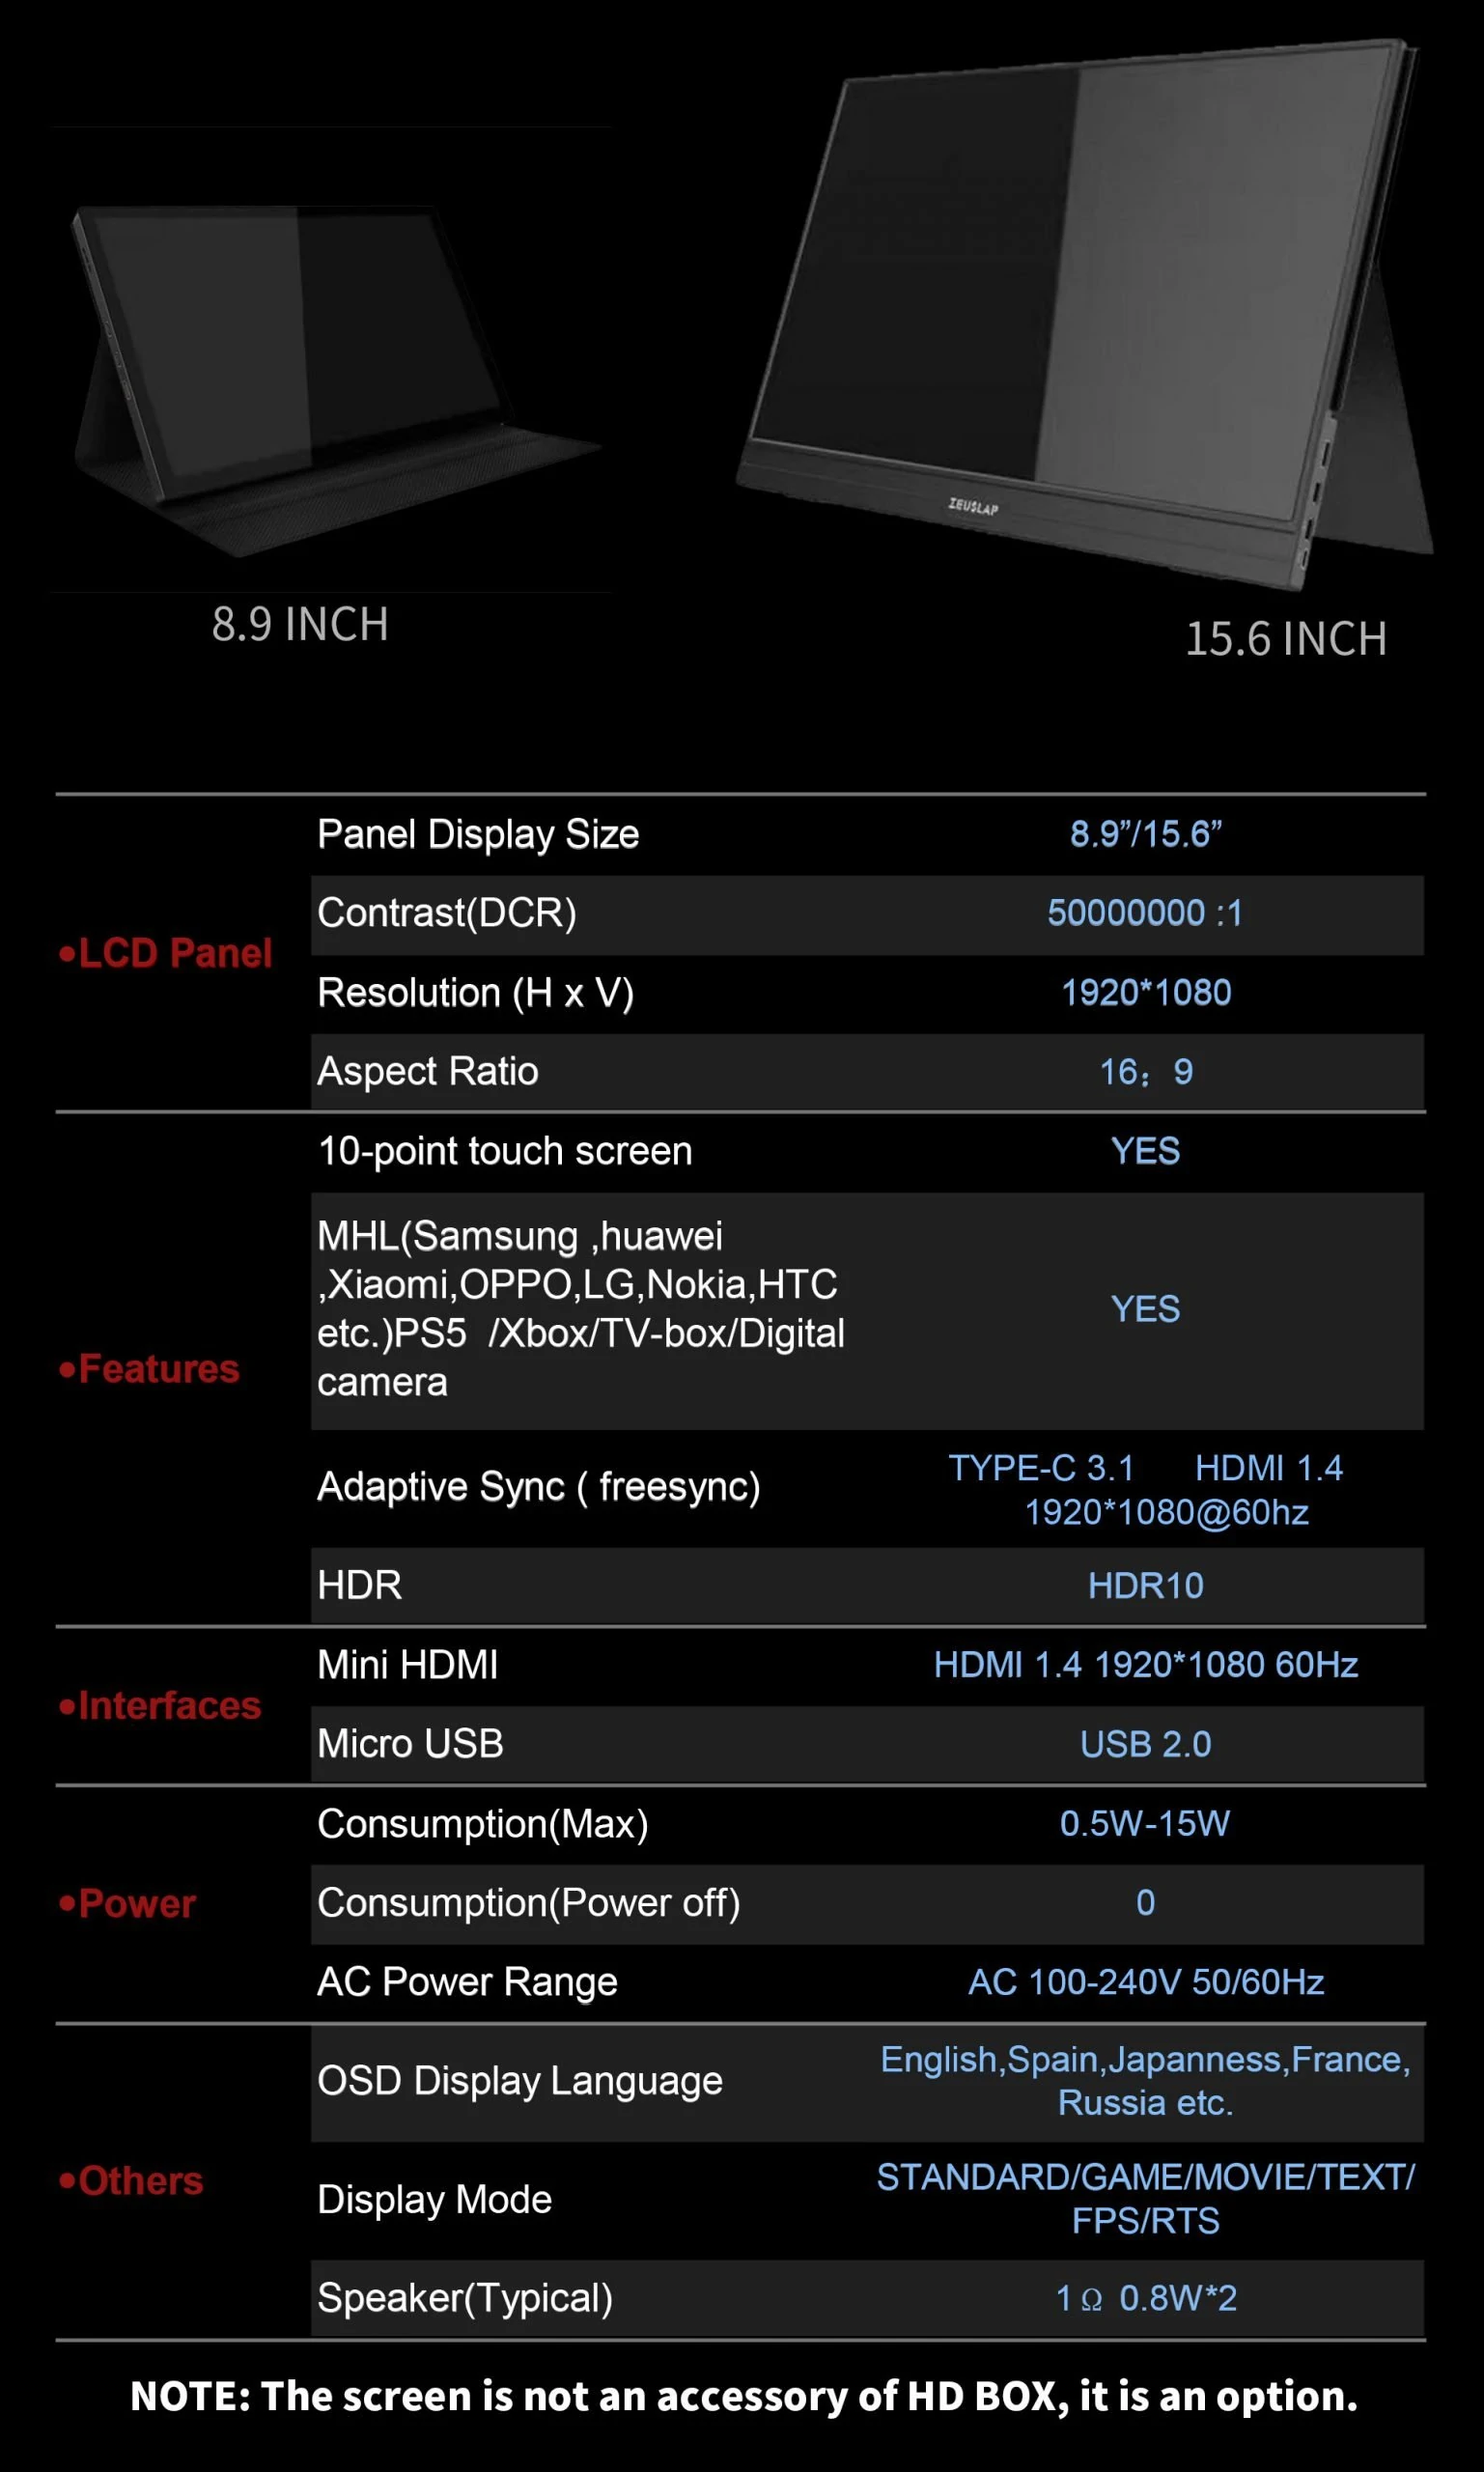 Axisflying FPV HD BOX - DJI V1/V2 Compatible